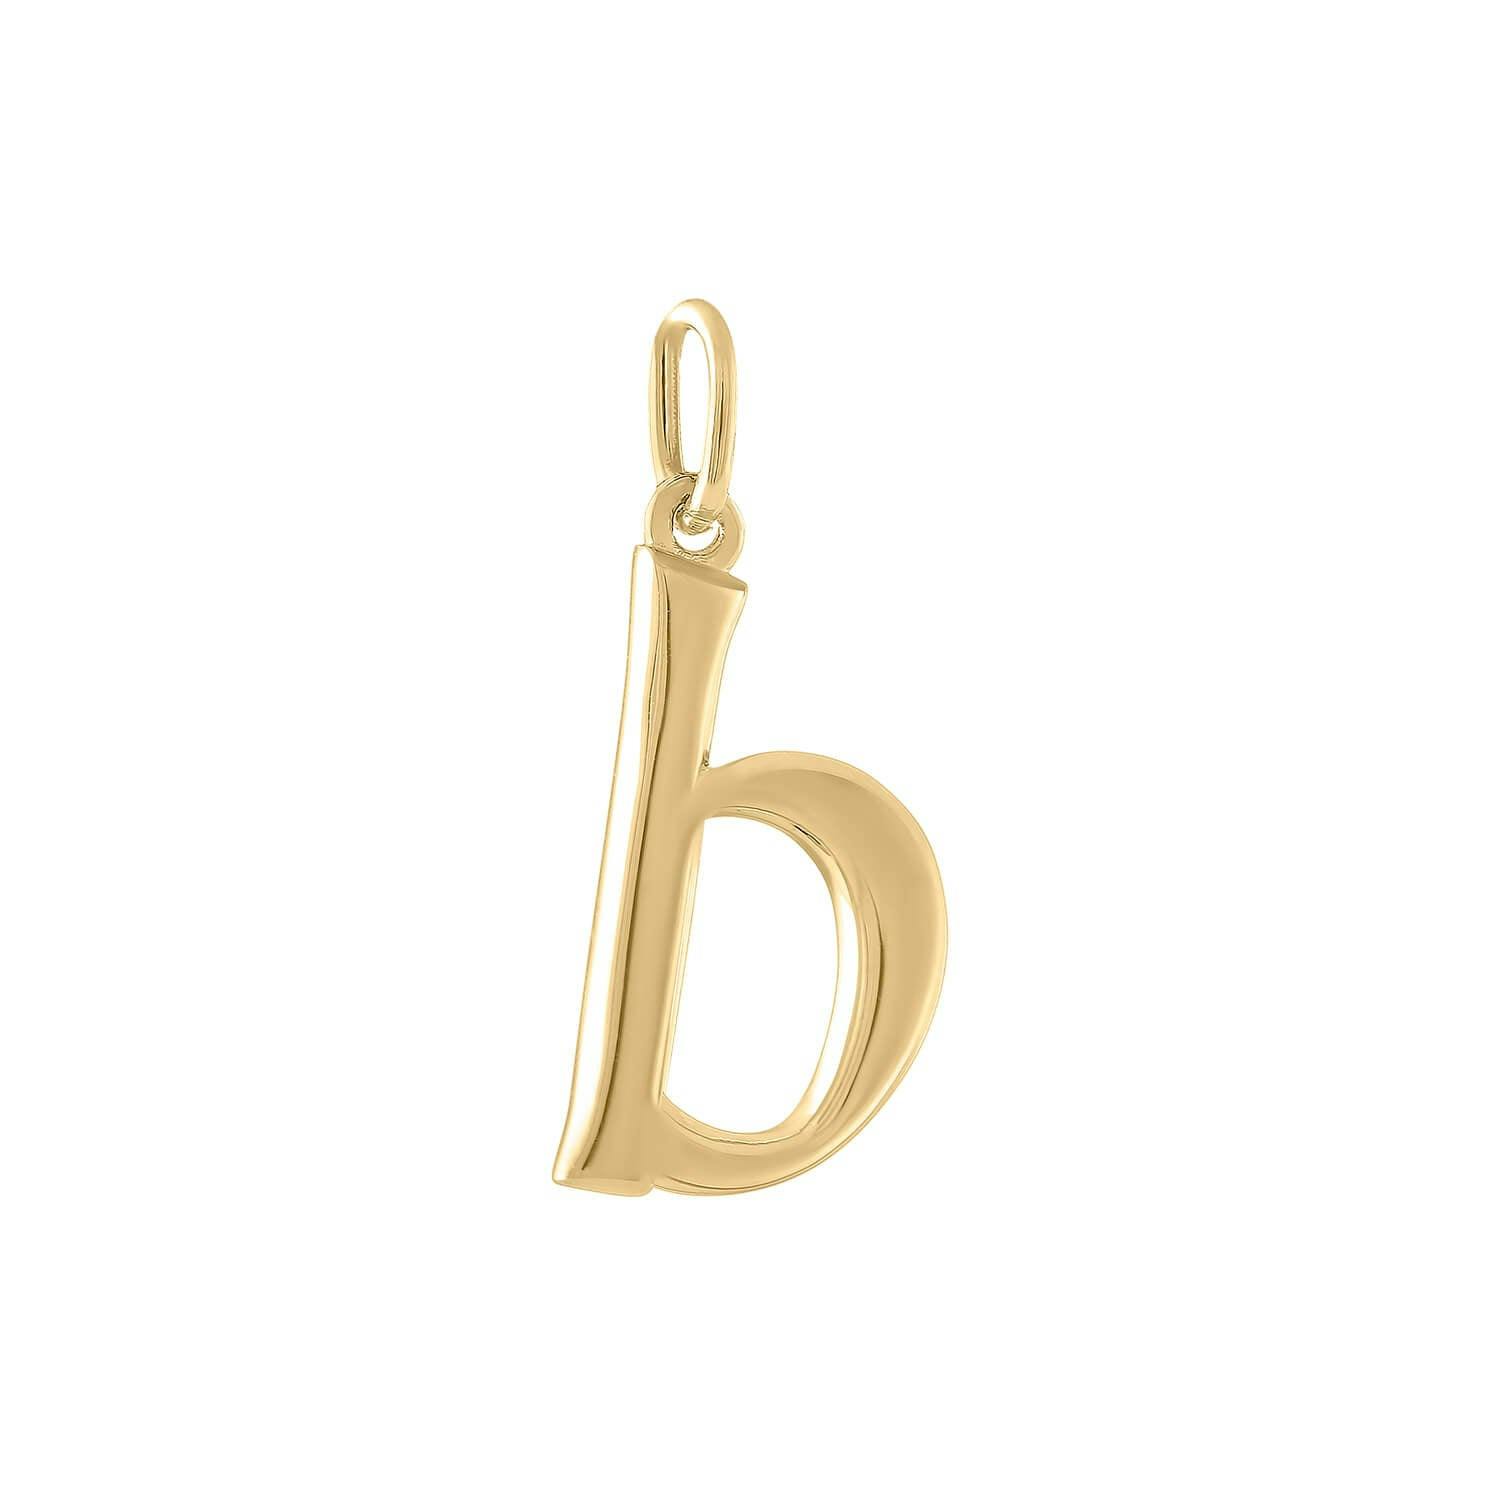 Initial Charm "B" in Gold Vermeil